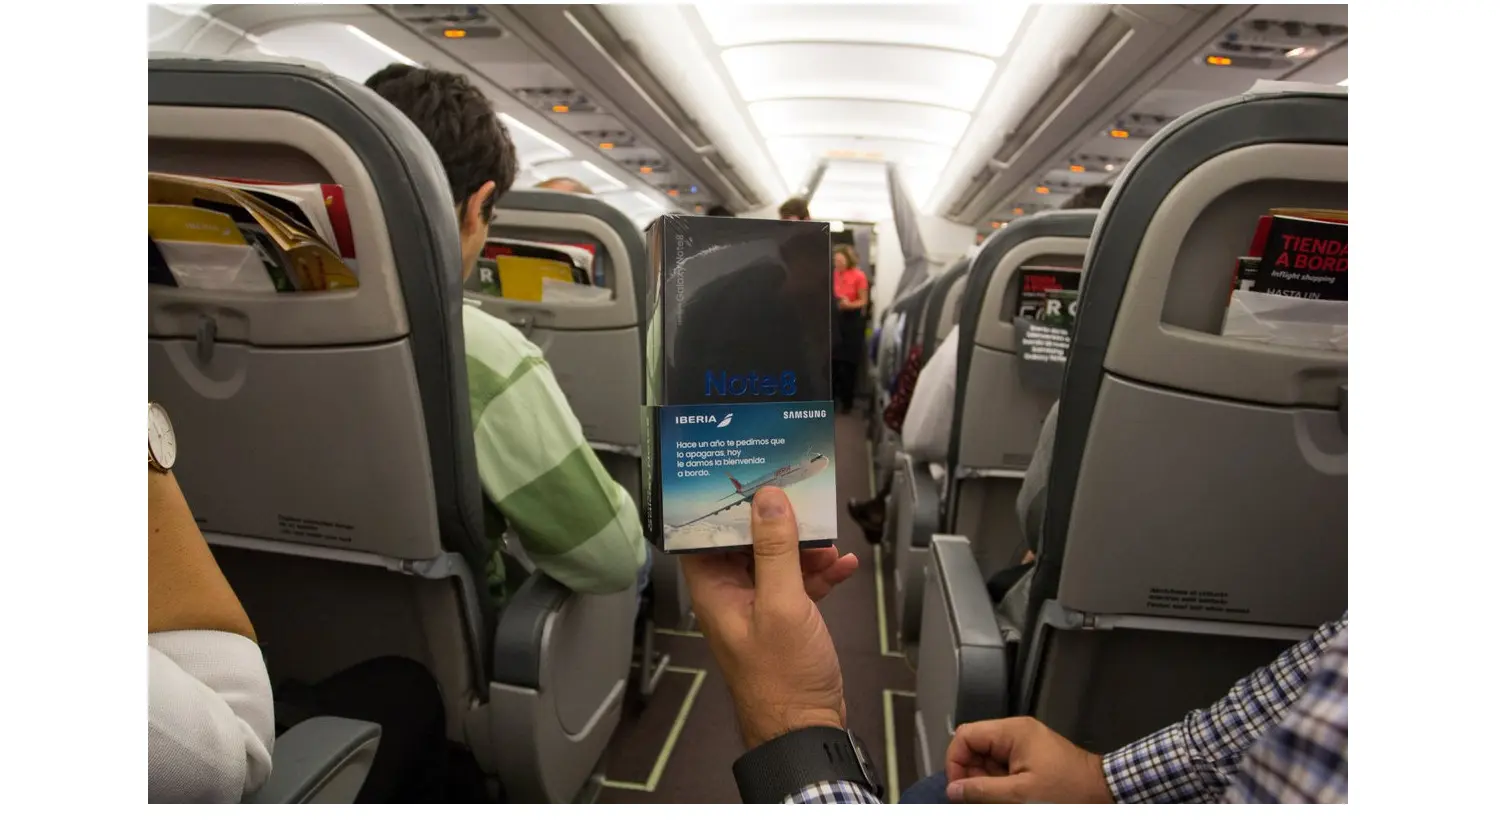 Galaxy Note 8 dibagikan secara gratis ke penumpang pesawat Iberia tujuan Madrid-A Coruna (Sumber: Twitter @iberia).